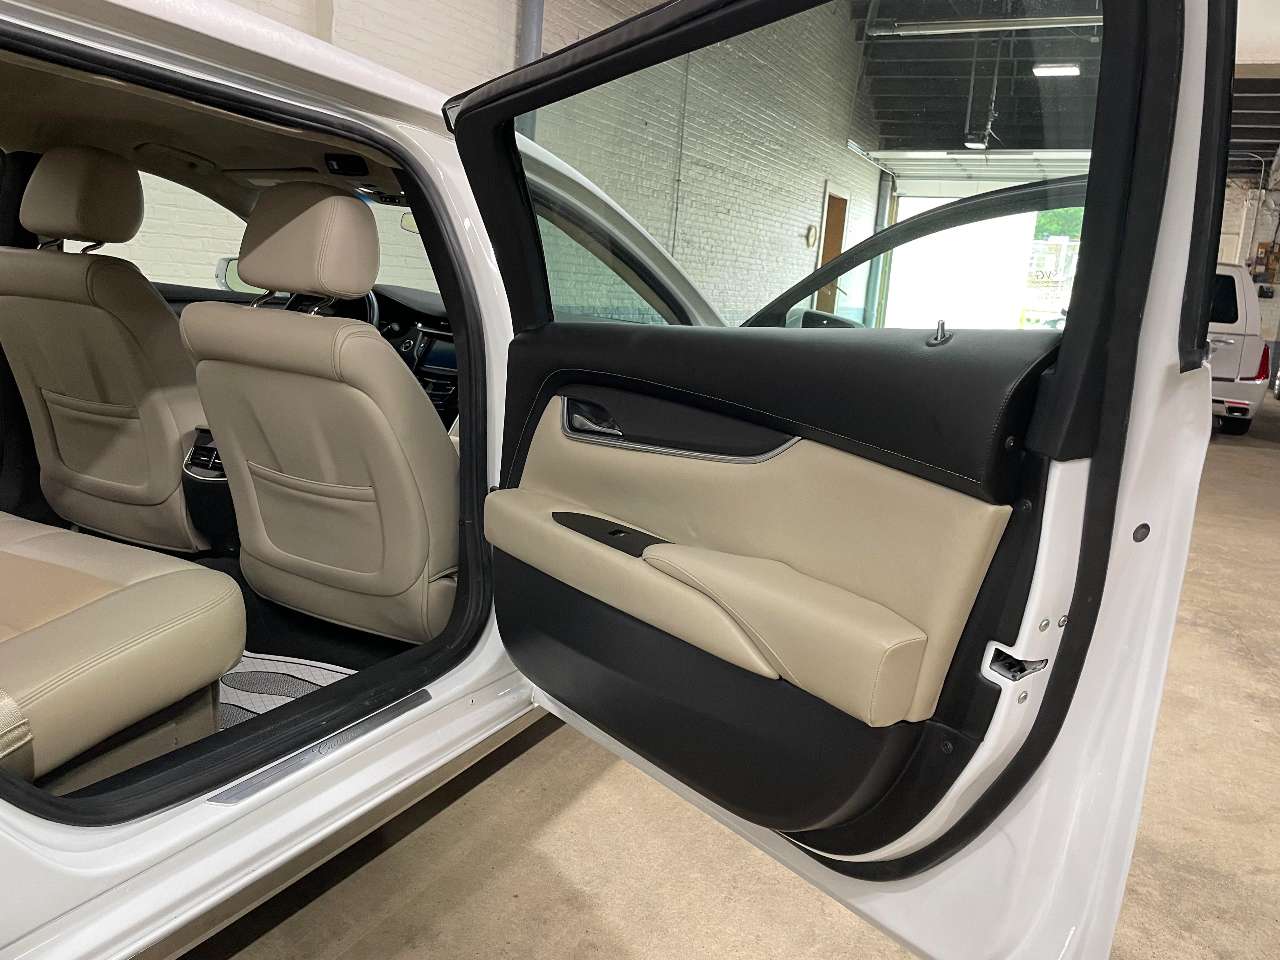 2019 Cadillac Eagle Kingsley Limousine 1695743834377